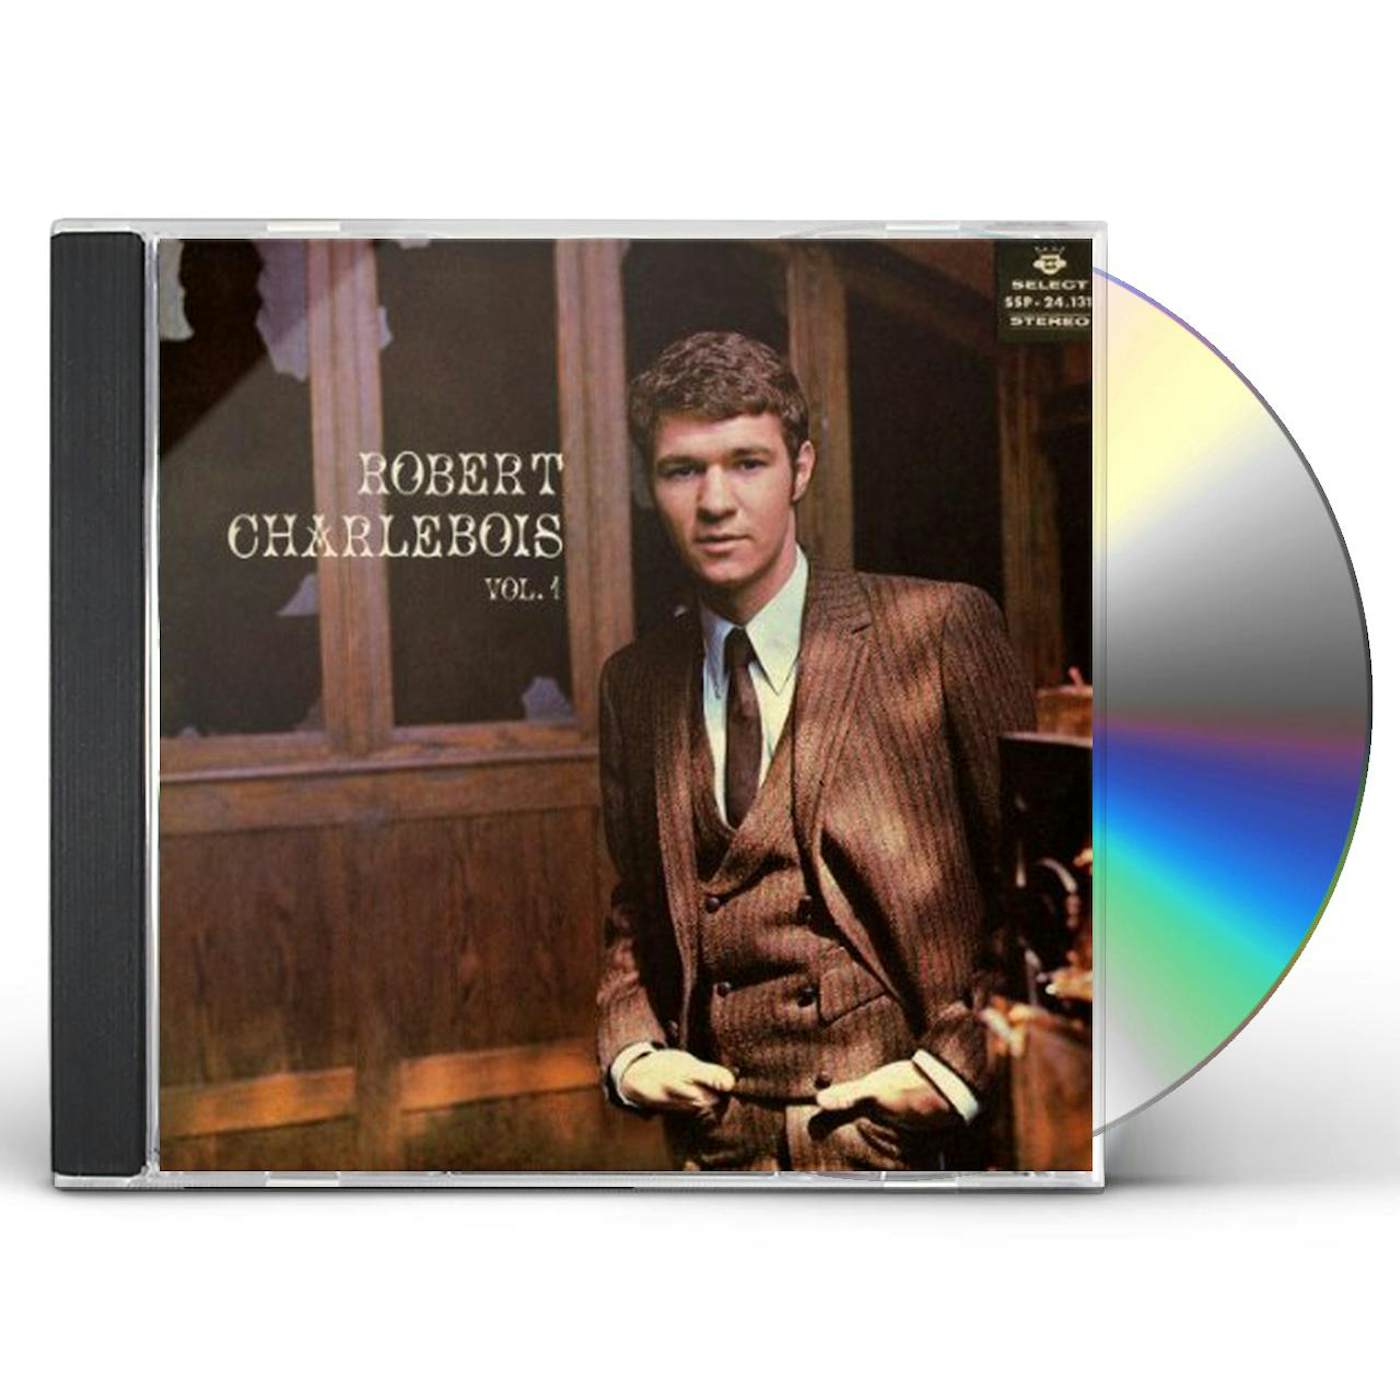 Robert Charlebois VOL. 1 CD